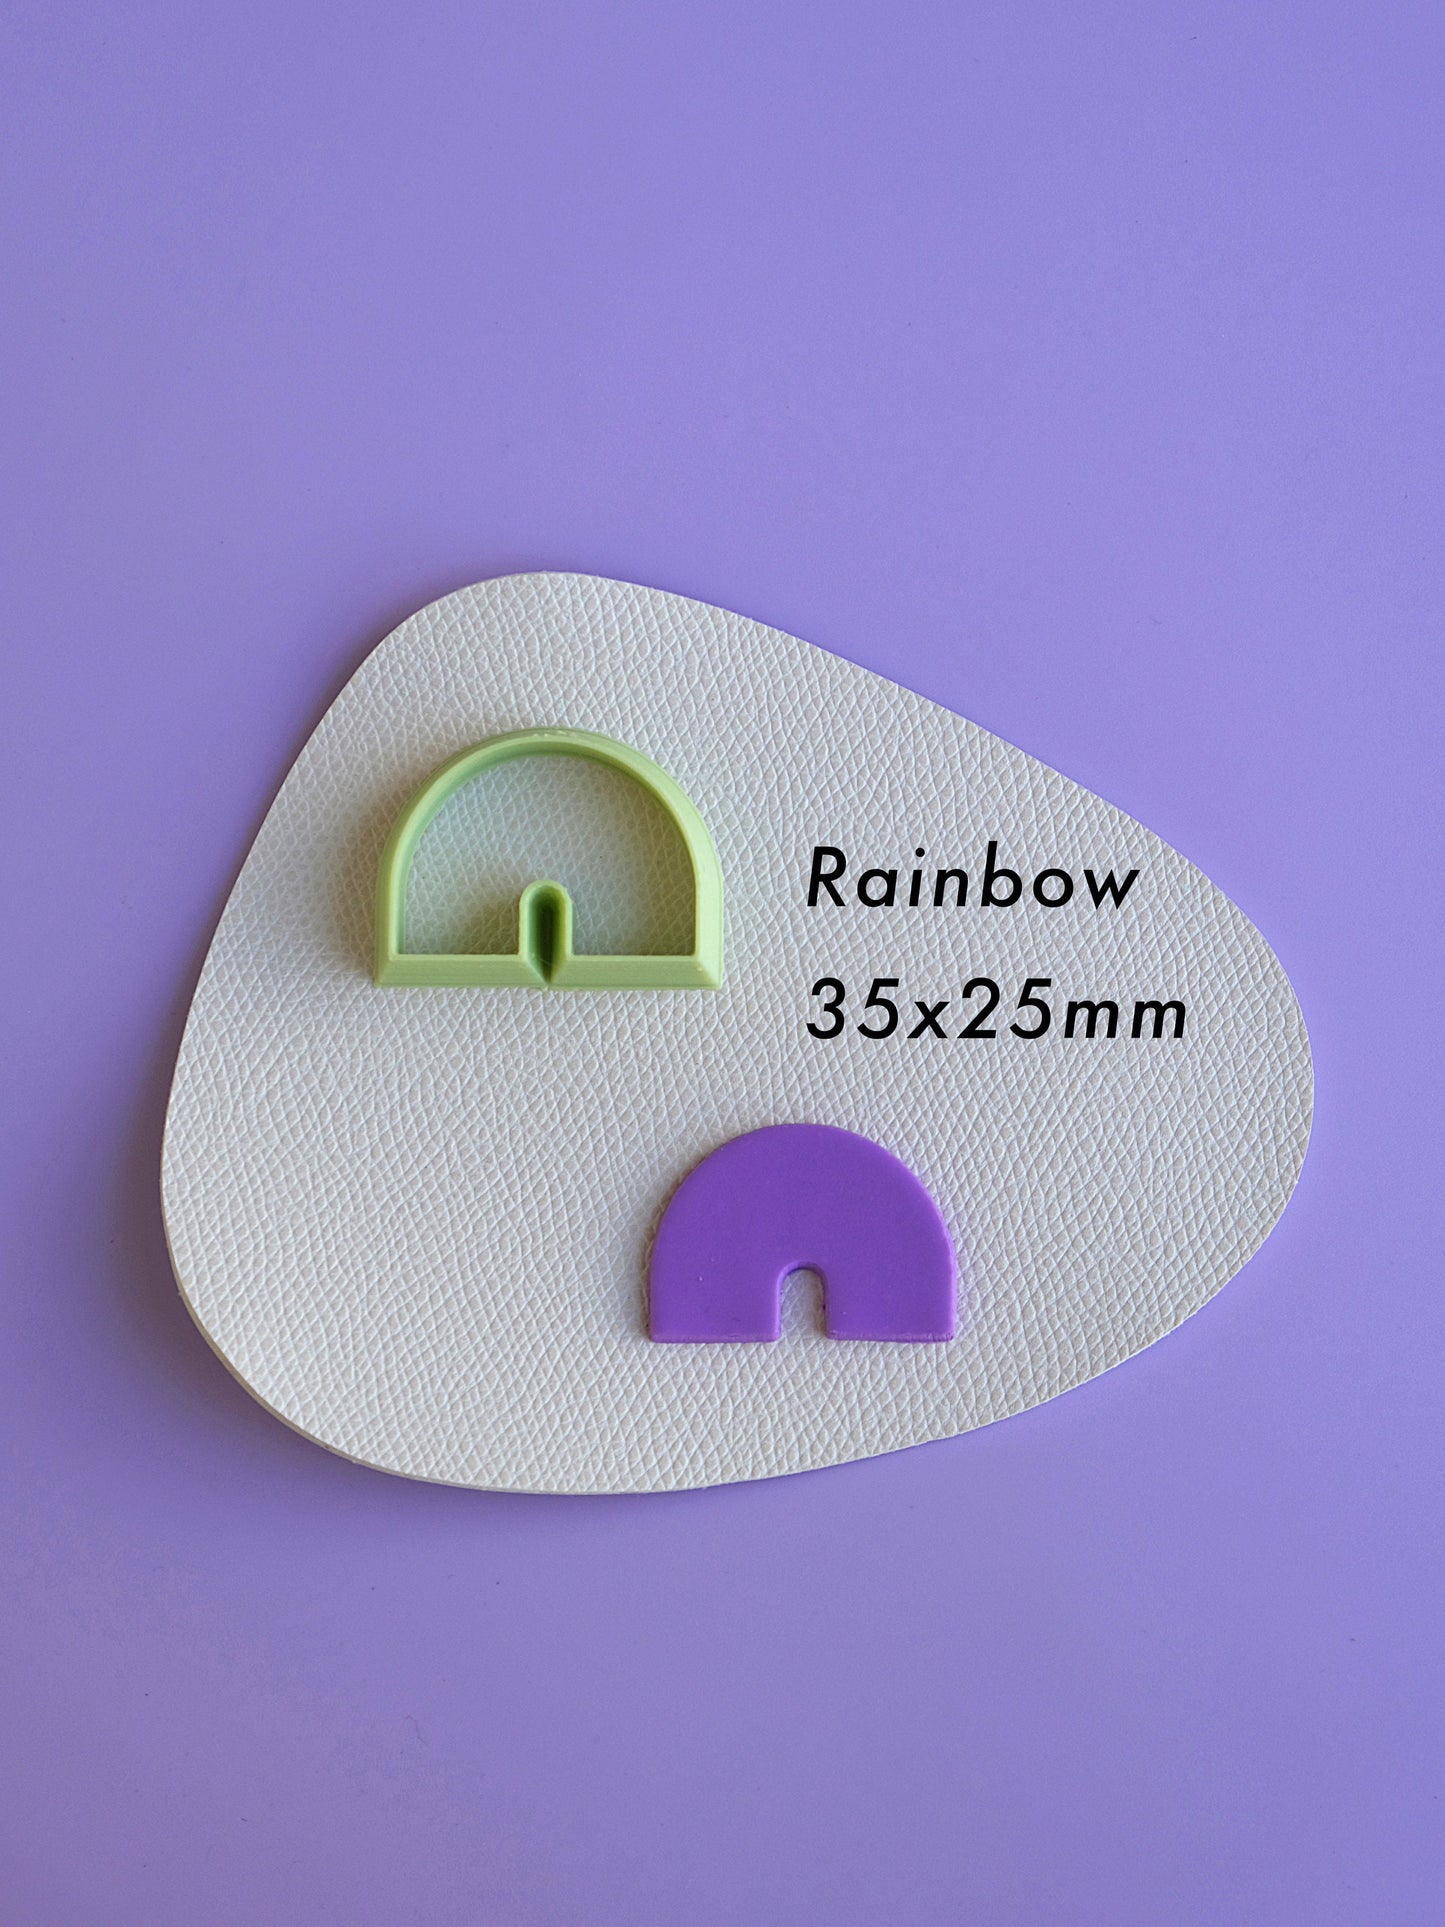 Originial Rainbow Shape Clay Earring Cutter